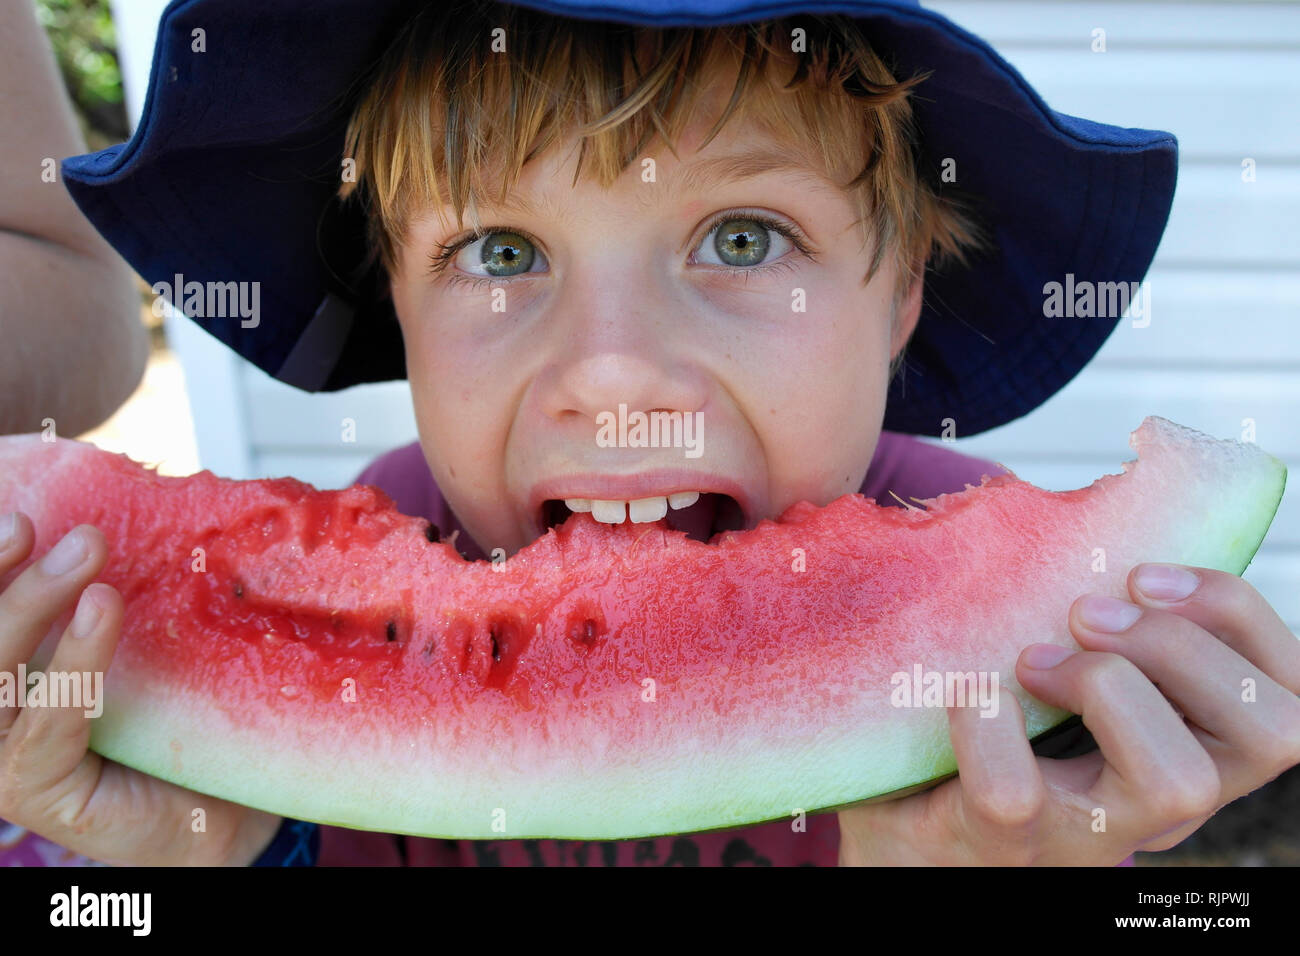 Boy biting into watermelon Stock Photo